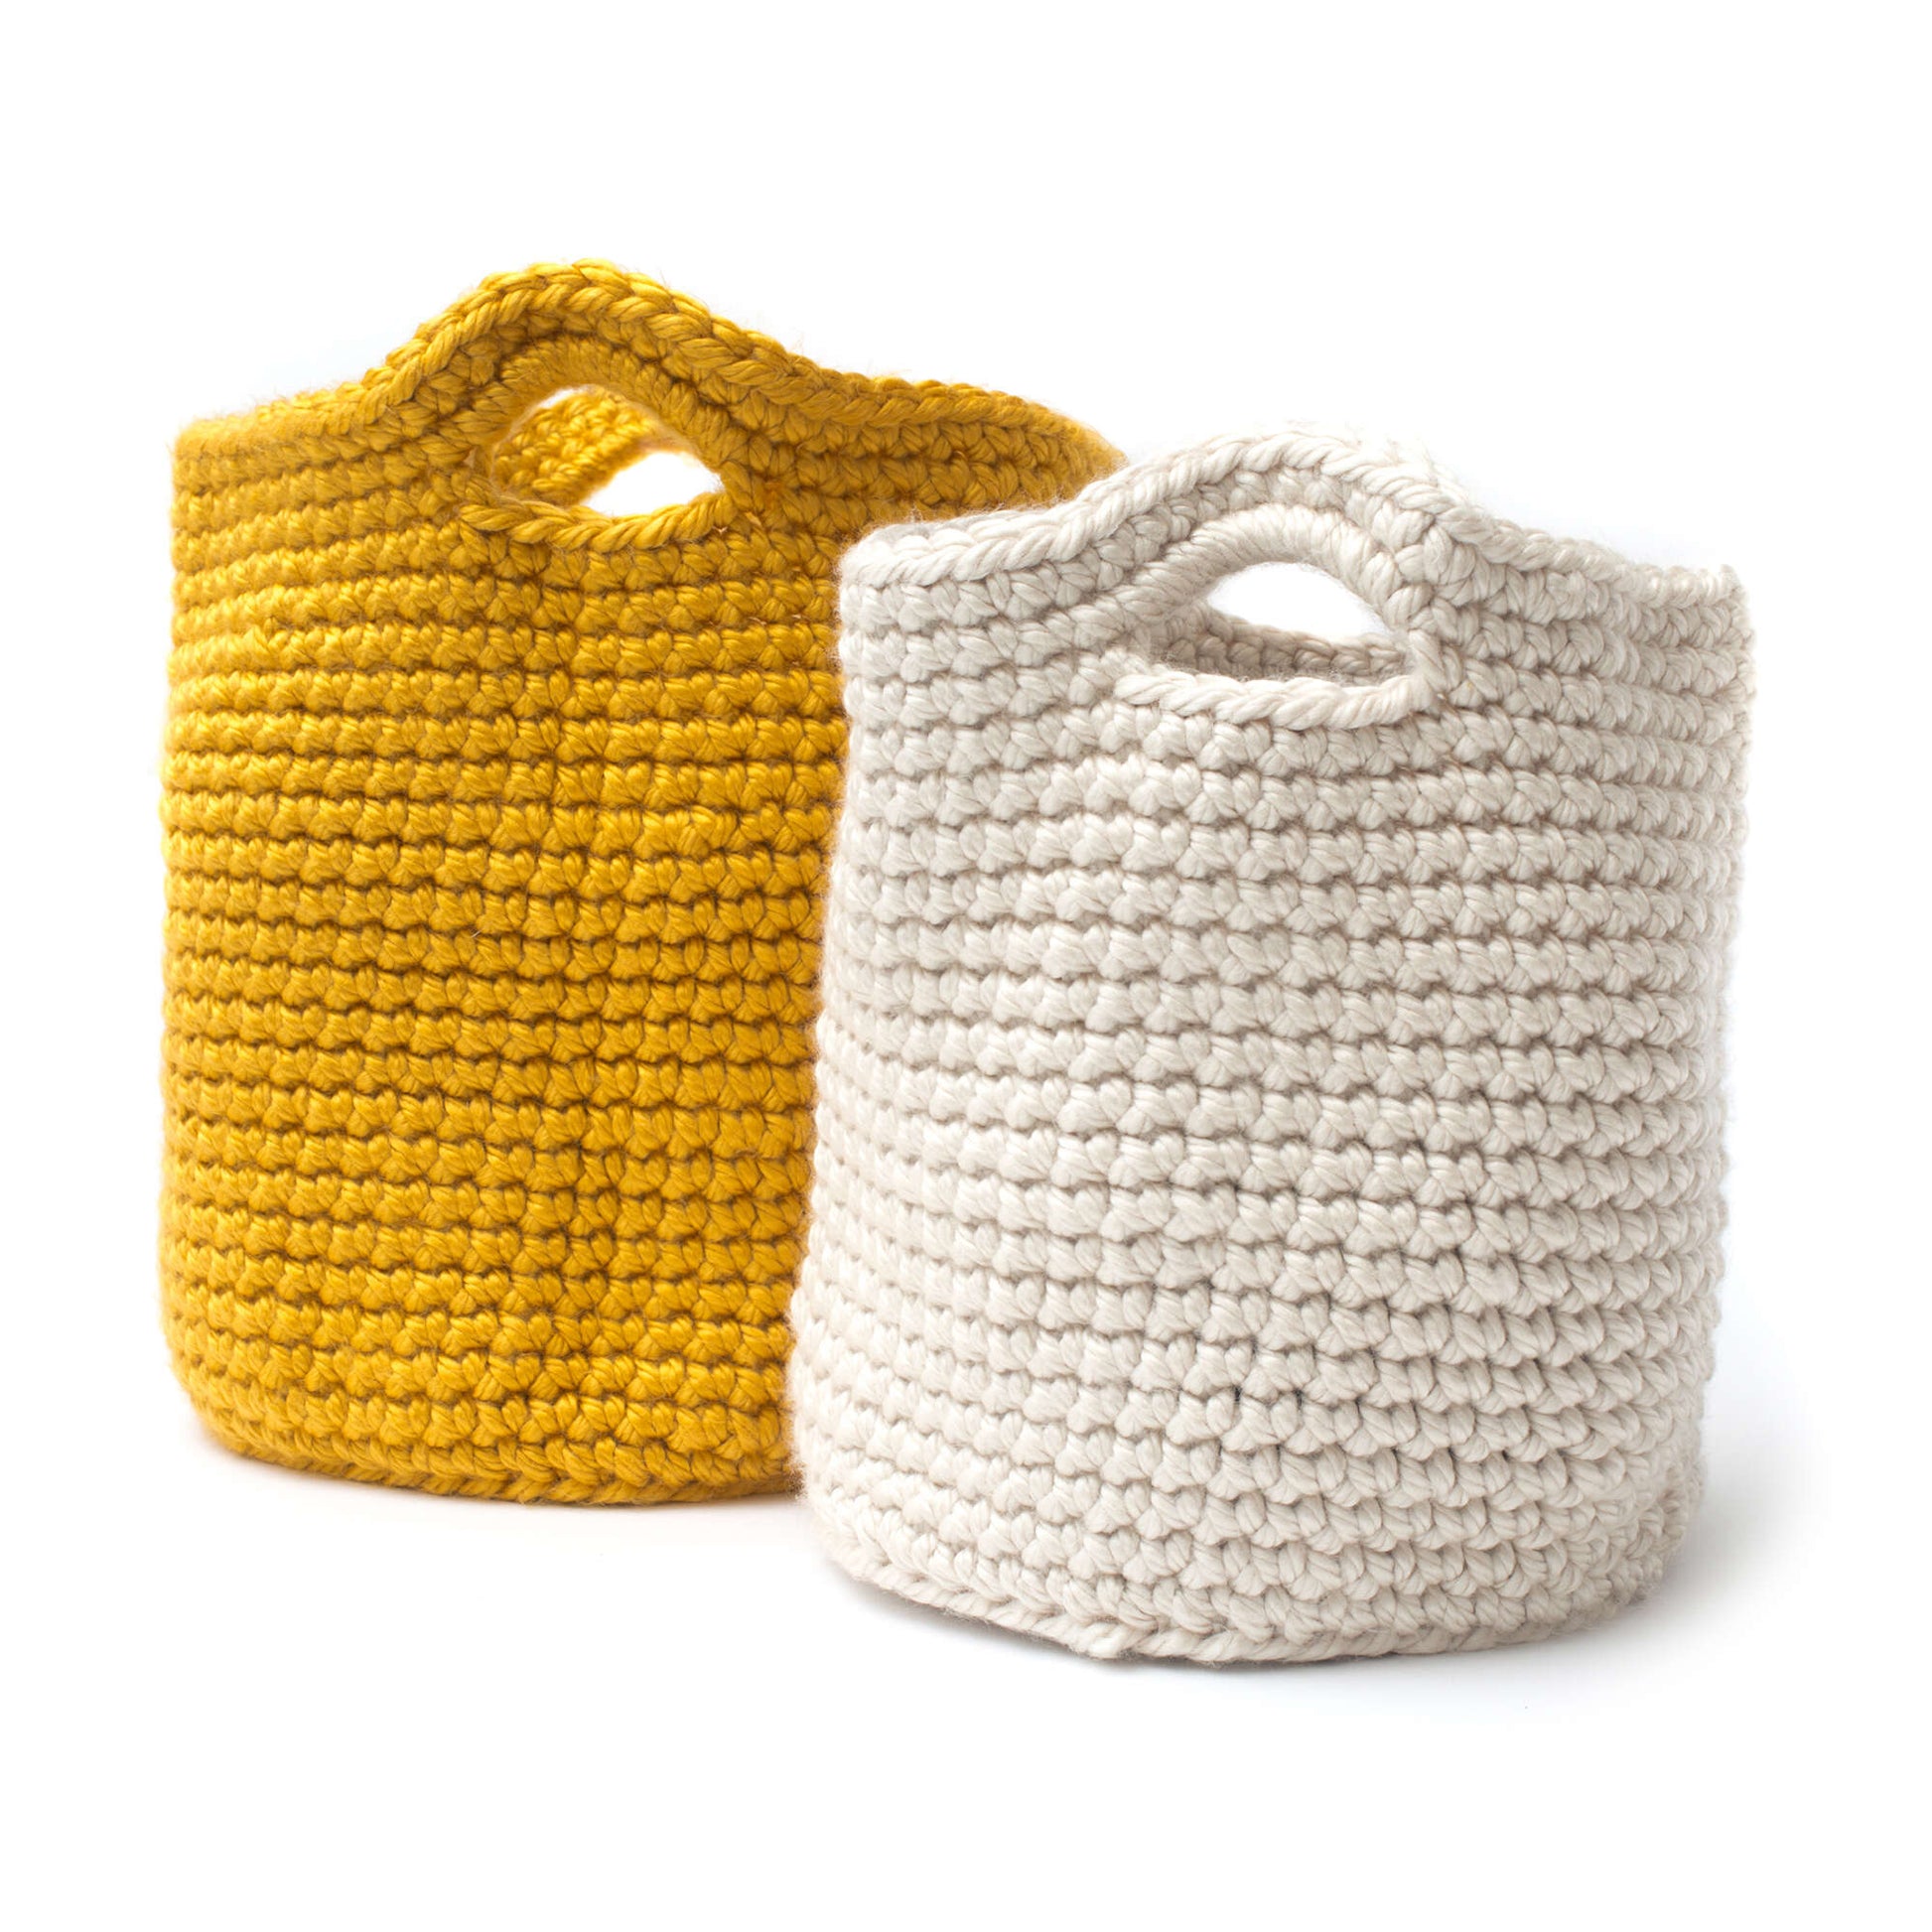 Free Bernat Crochet Cache Baskets Pattern